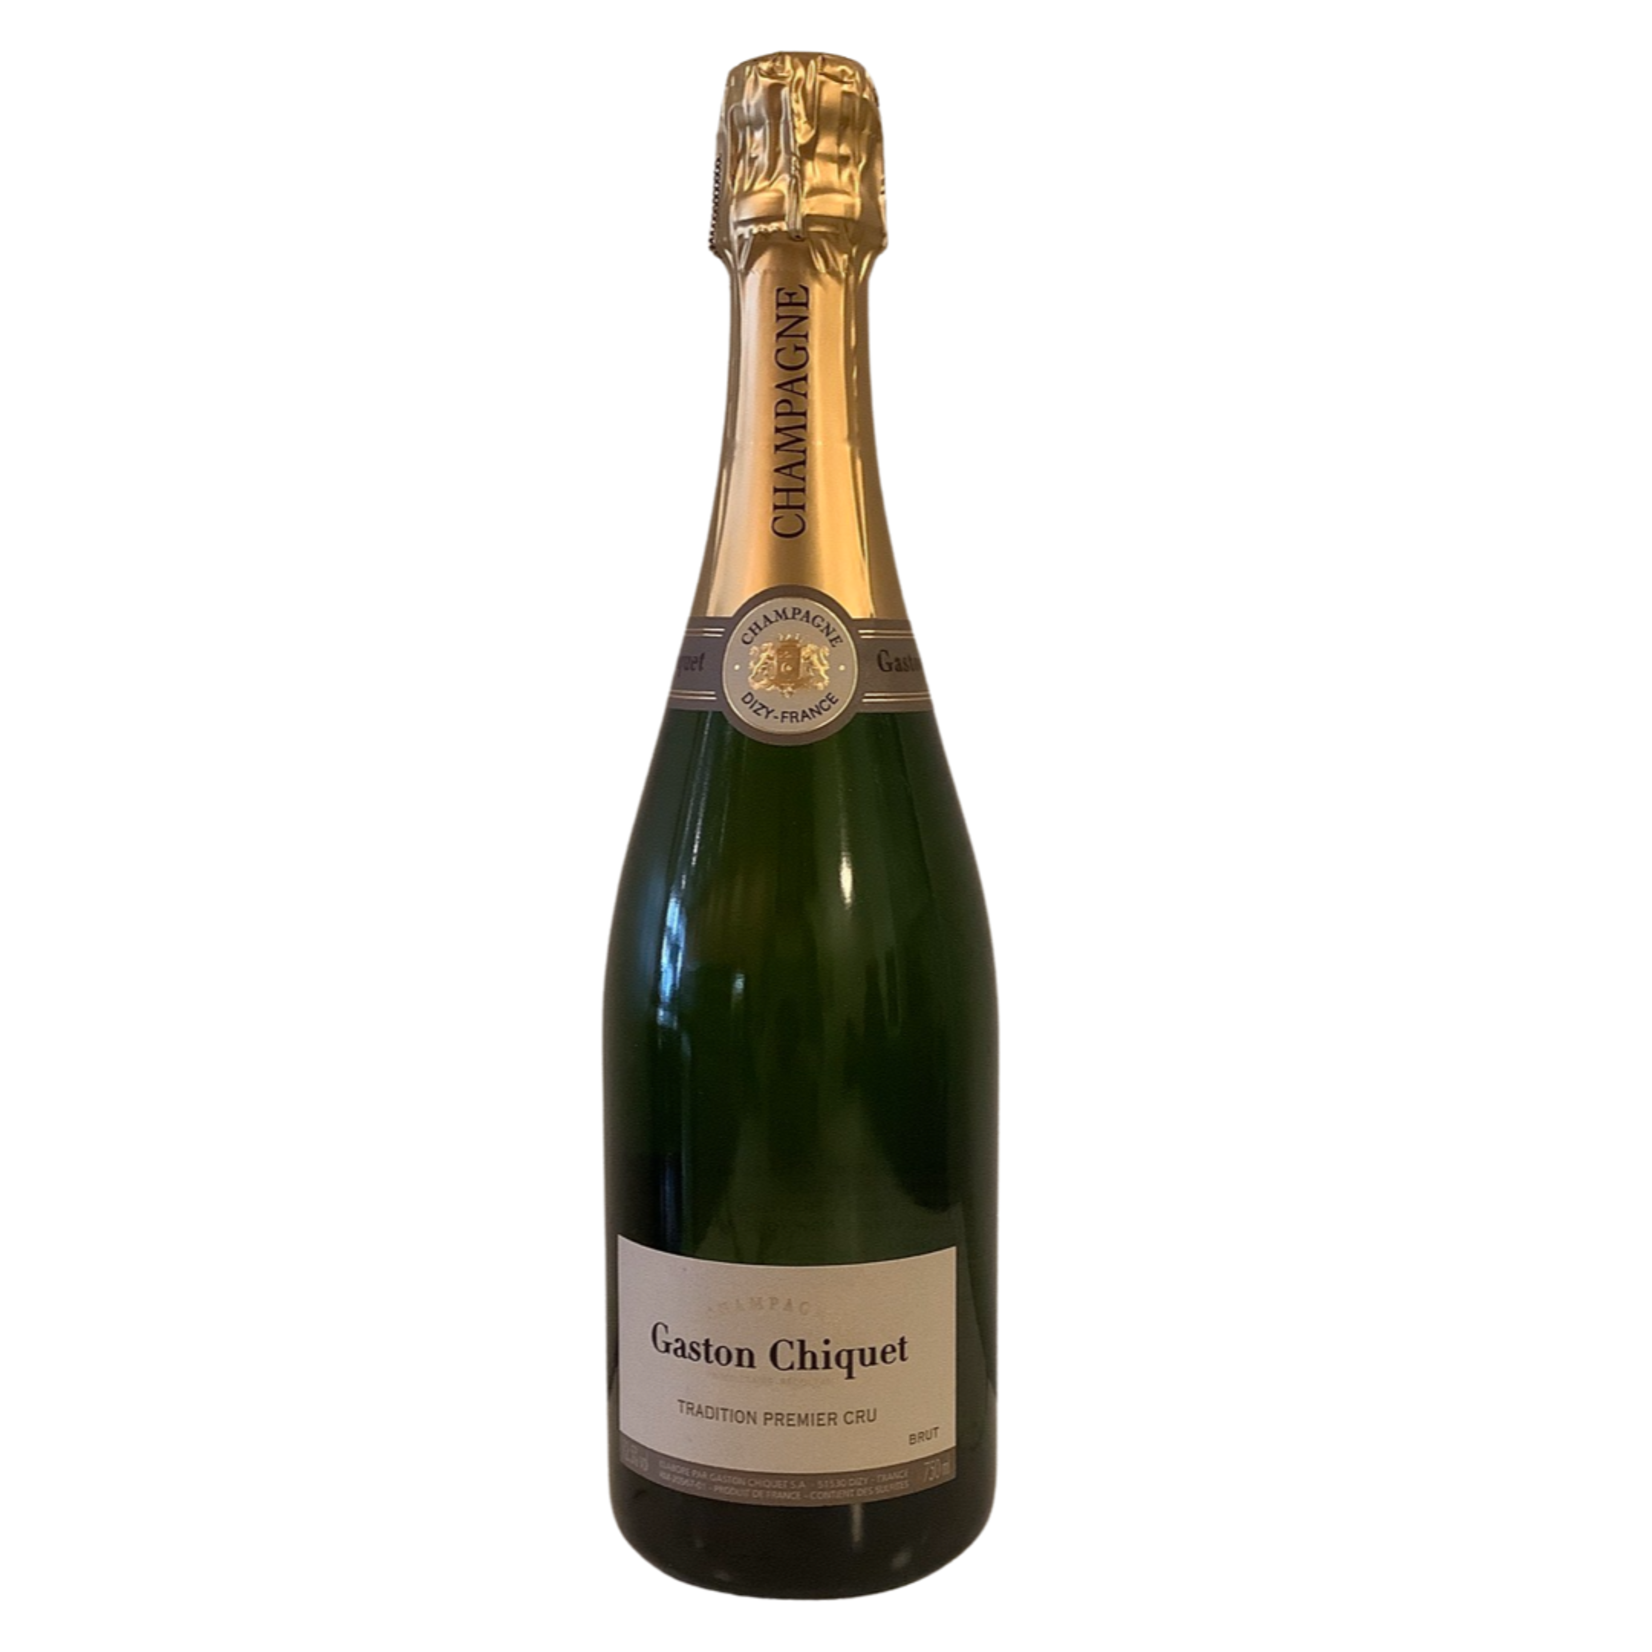 NV Gaston Chiquet Tradition Premier Cru Champagne, Dizy | France